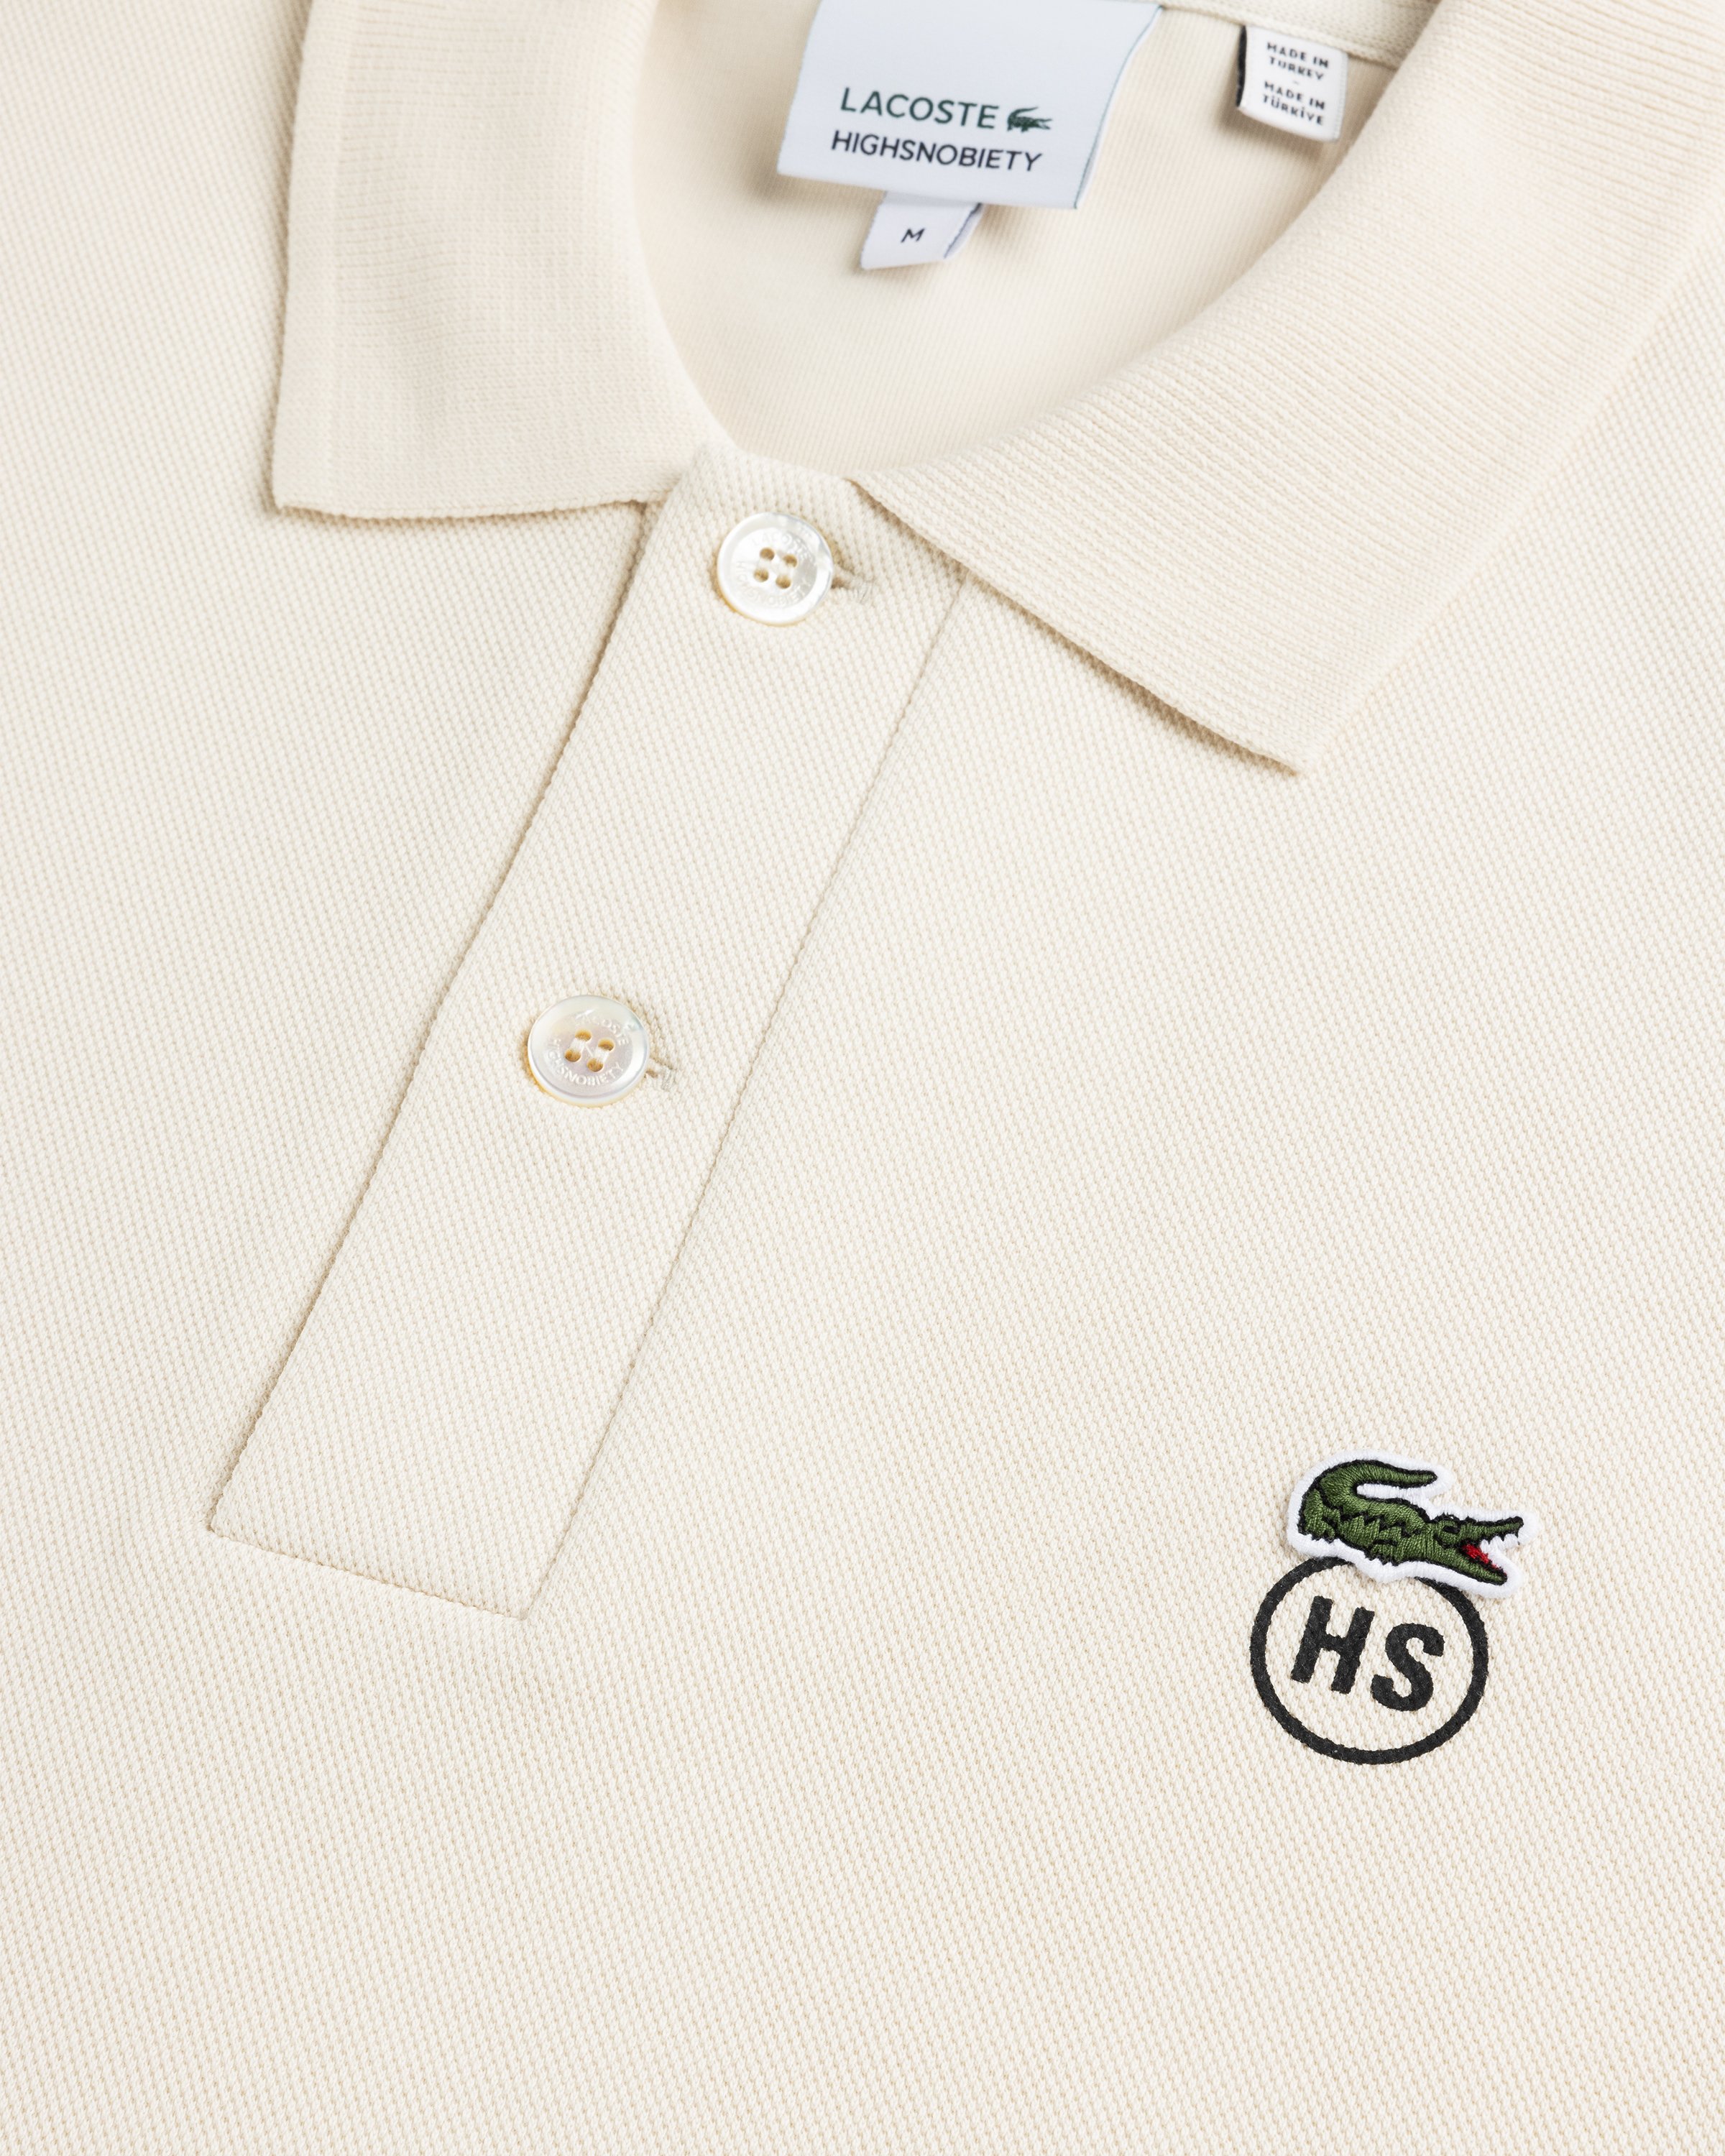 Lacoste x Highsnobiety - Eggshell Polo Shirt - Clothing - Eggshell - Image 4